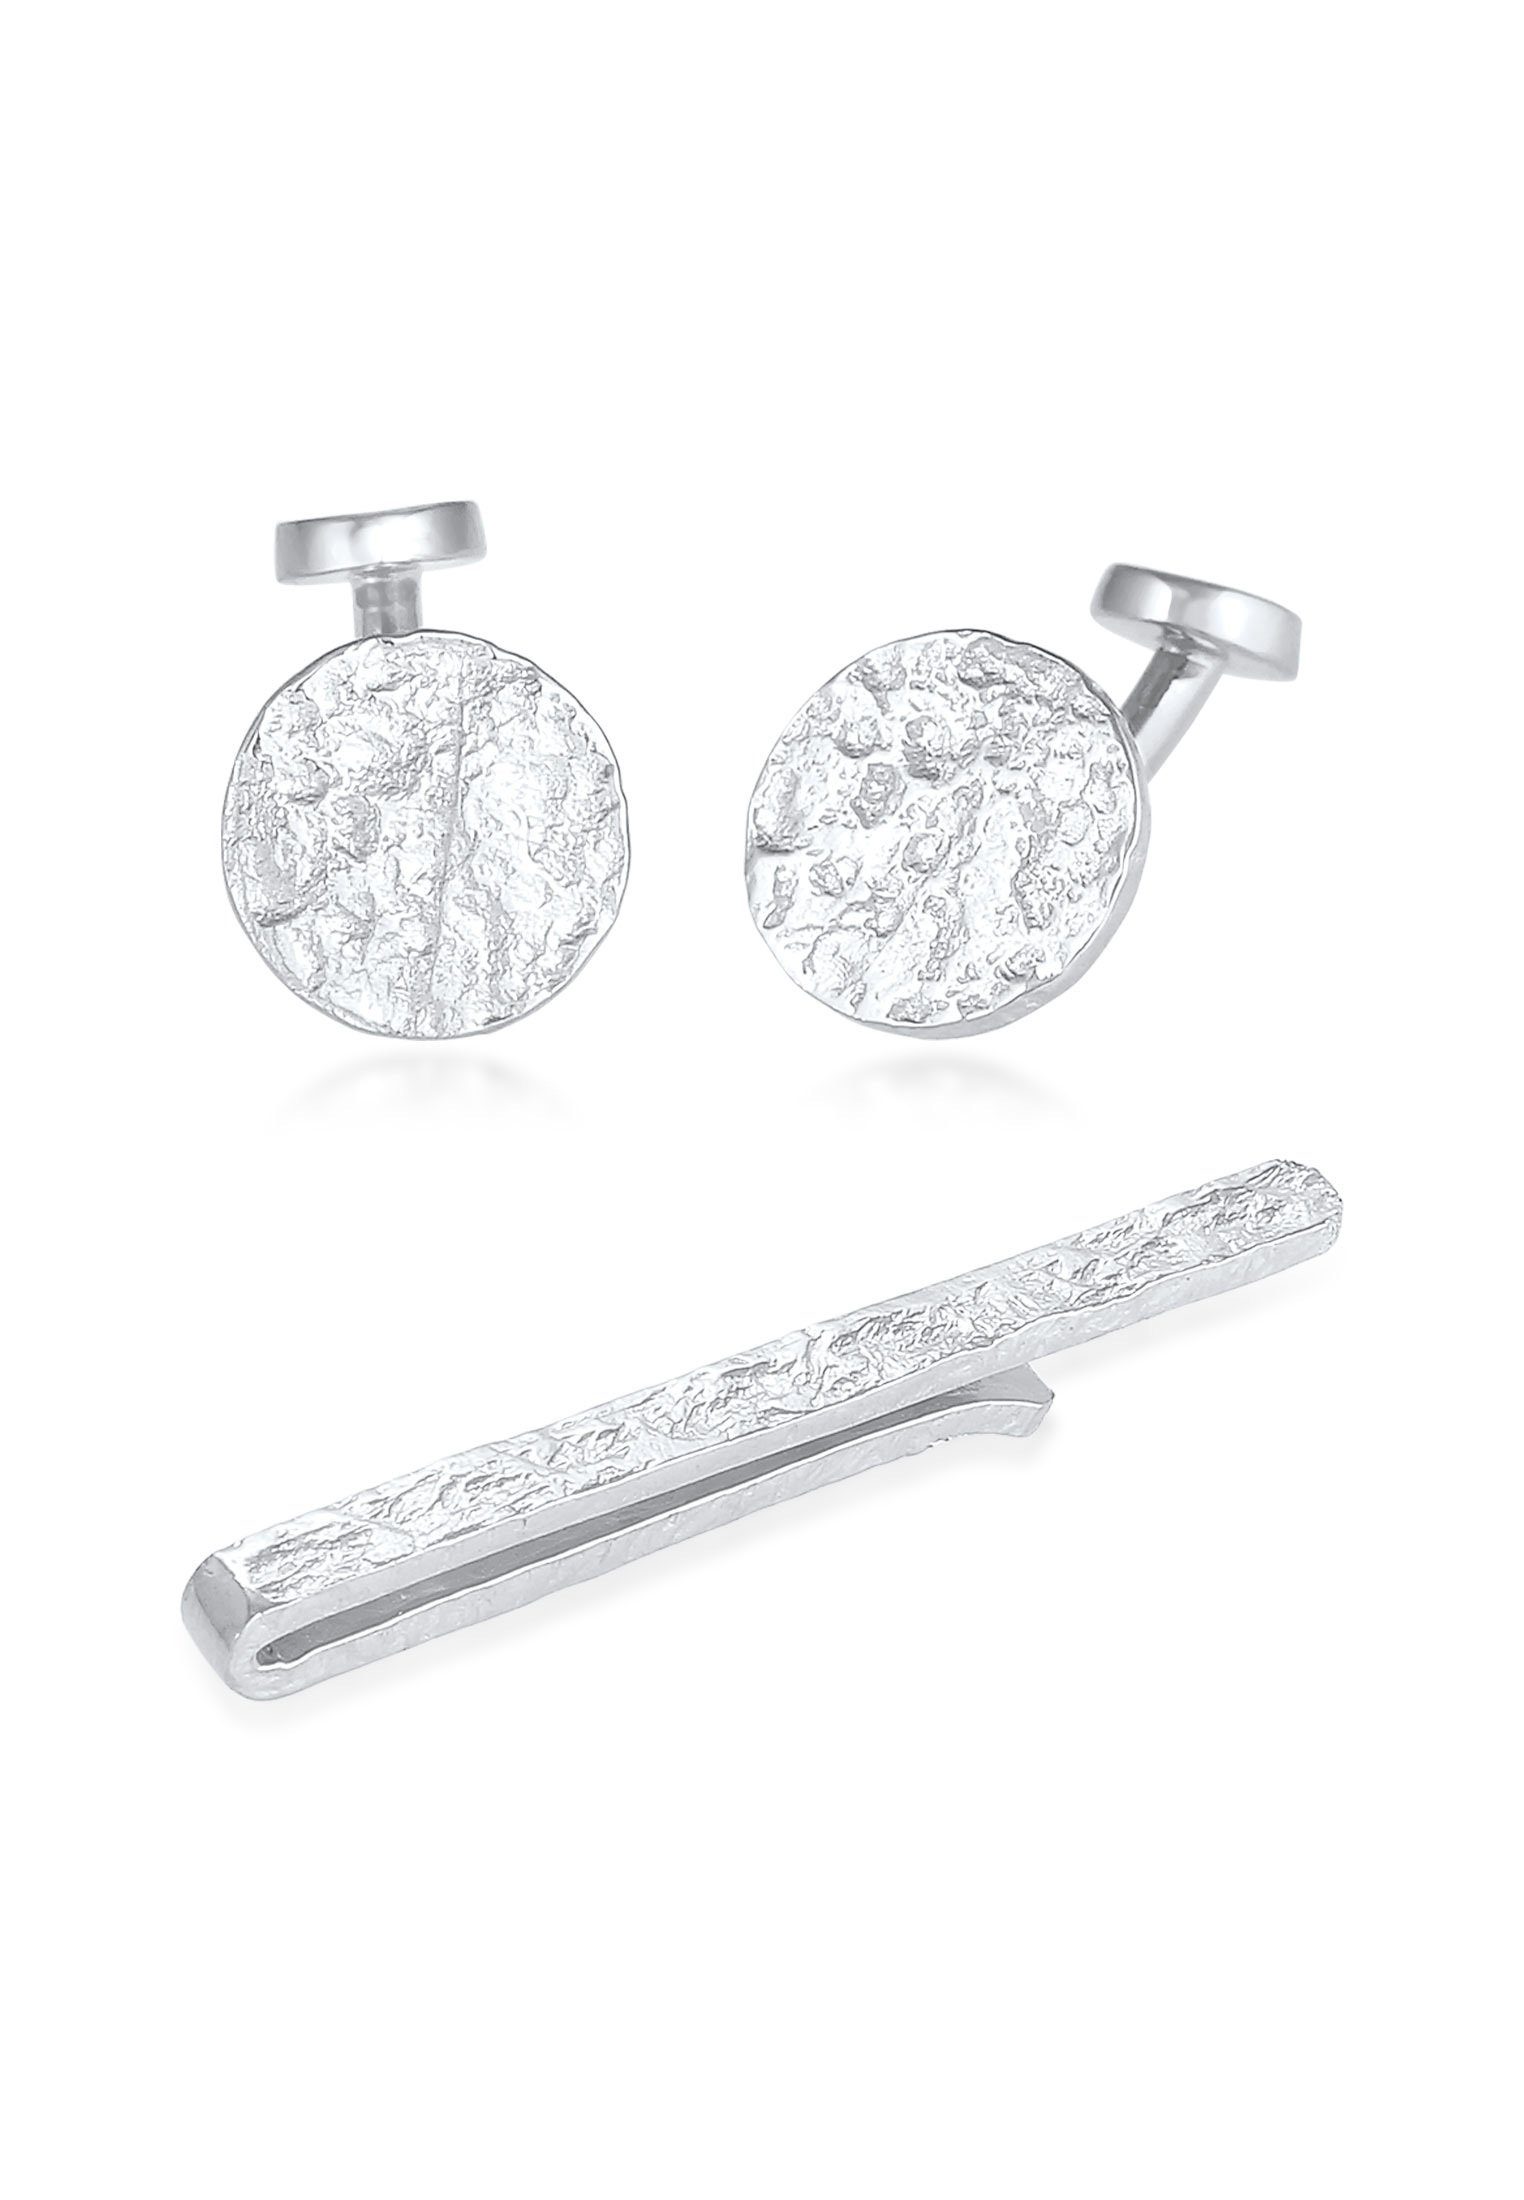 Kuzzoi Krawattennadel Set Manschettenknöpfe Krawattennadel Struktur Silber,  Set aus strukturierten, glänzendem Silber 925